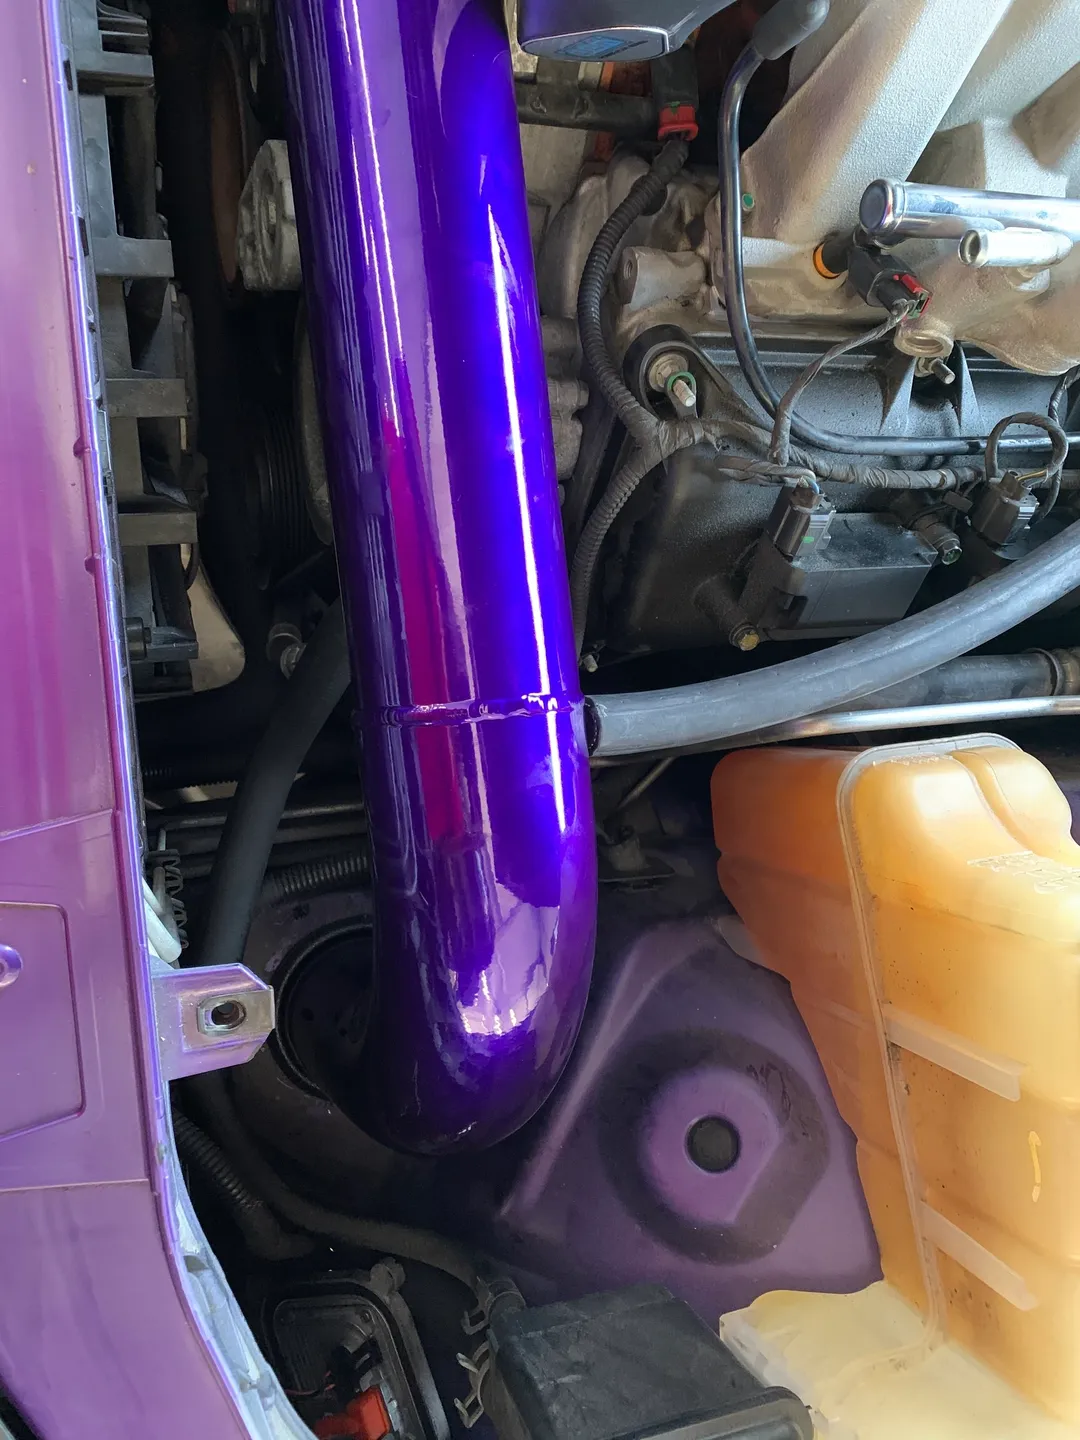 A hemi, purple fabricated auto parts